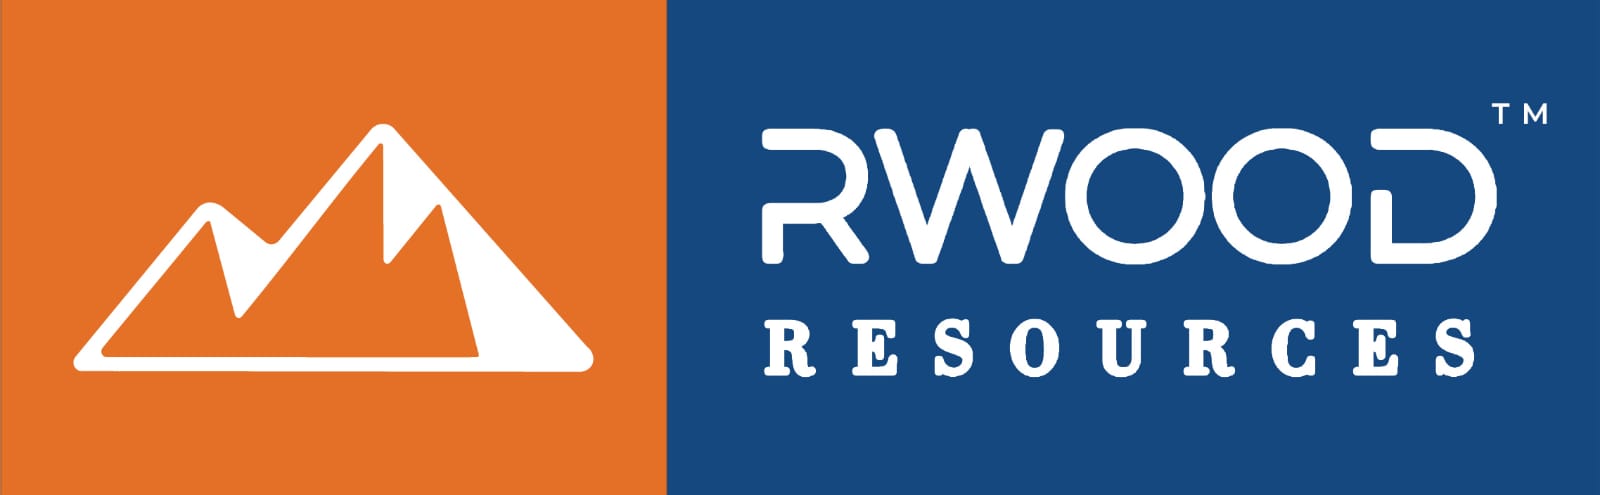 Rwood Resources